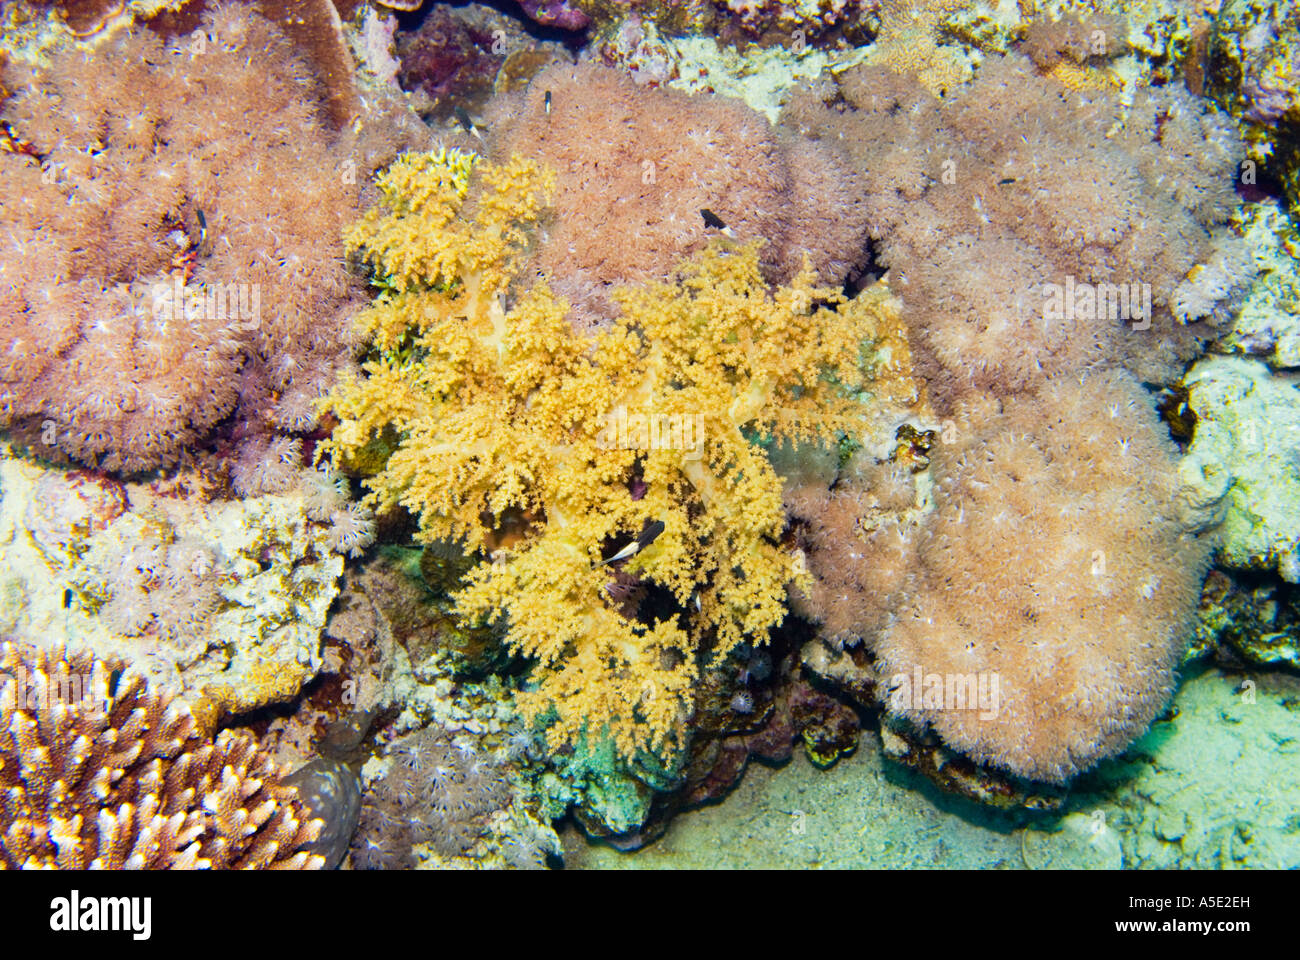 Broccoli soft coral LITHOPHYTON ARBOREUM yellow red sea RAS MOHAMED Sharm El Sheikh EGYPT sinai Stock Photo